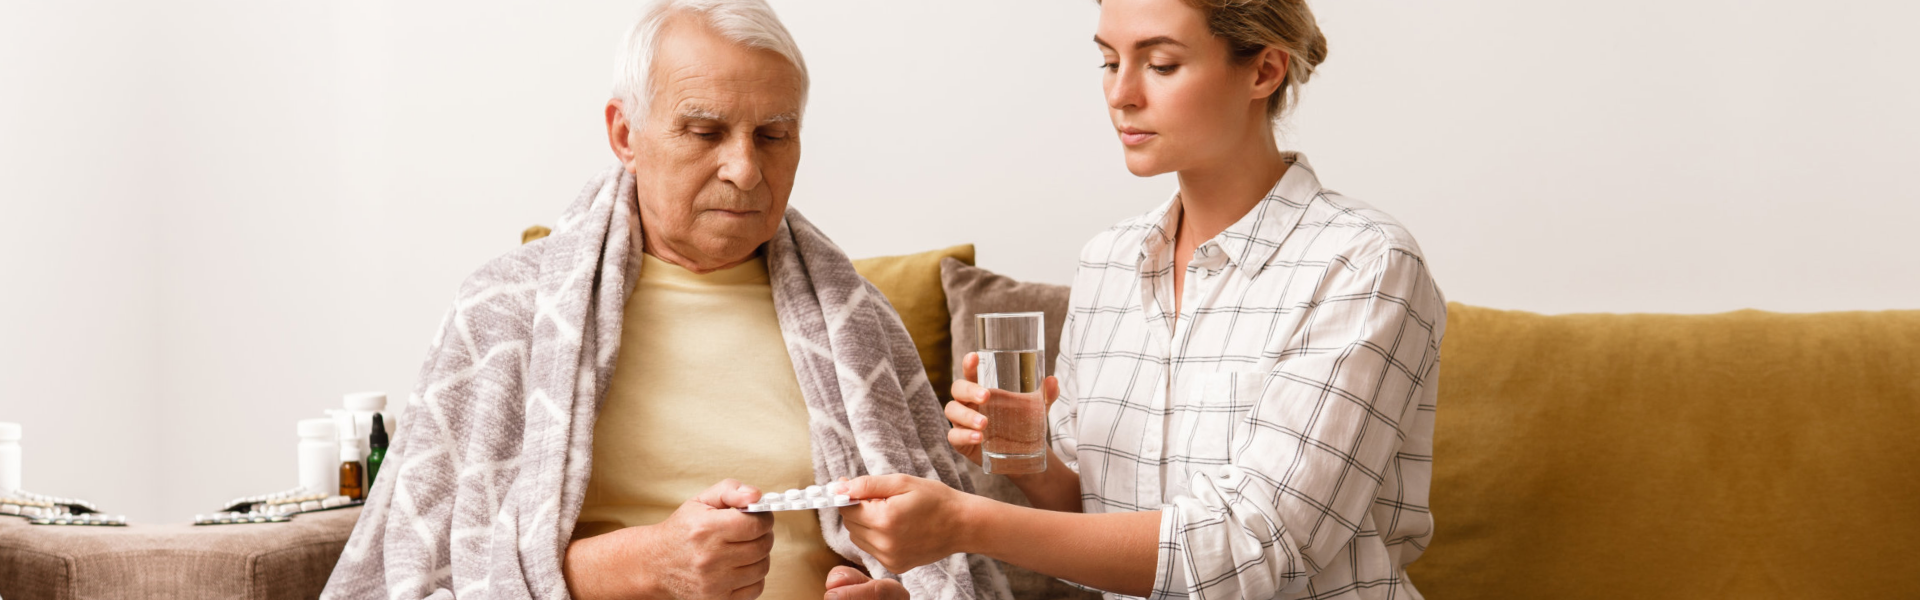 caregiver giving medicine to the elderly